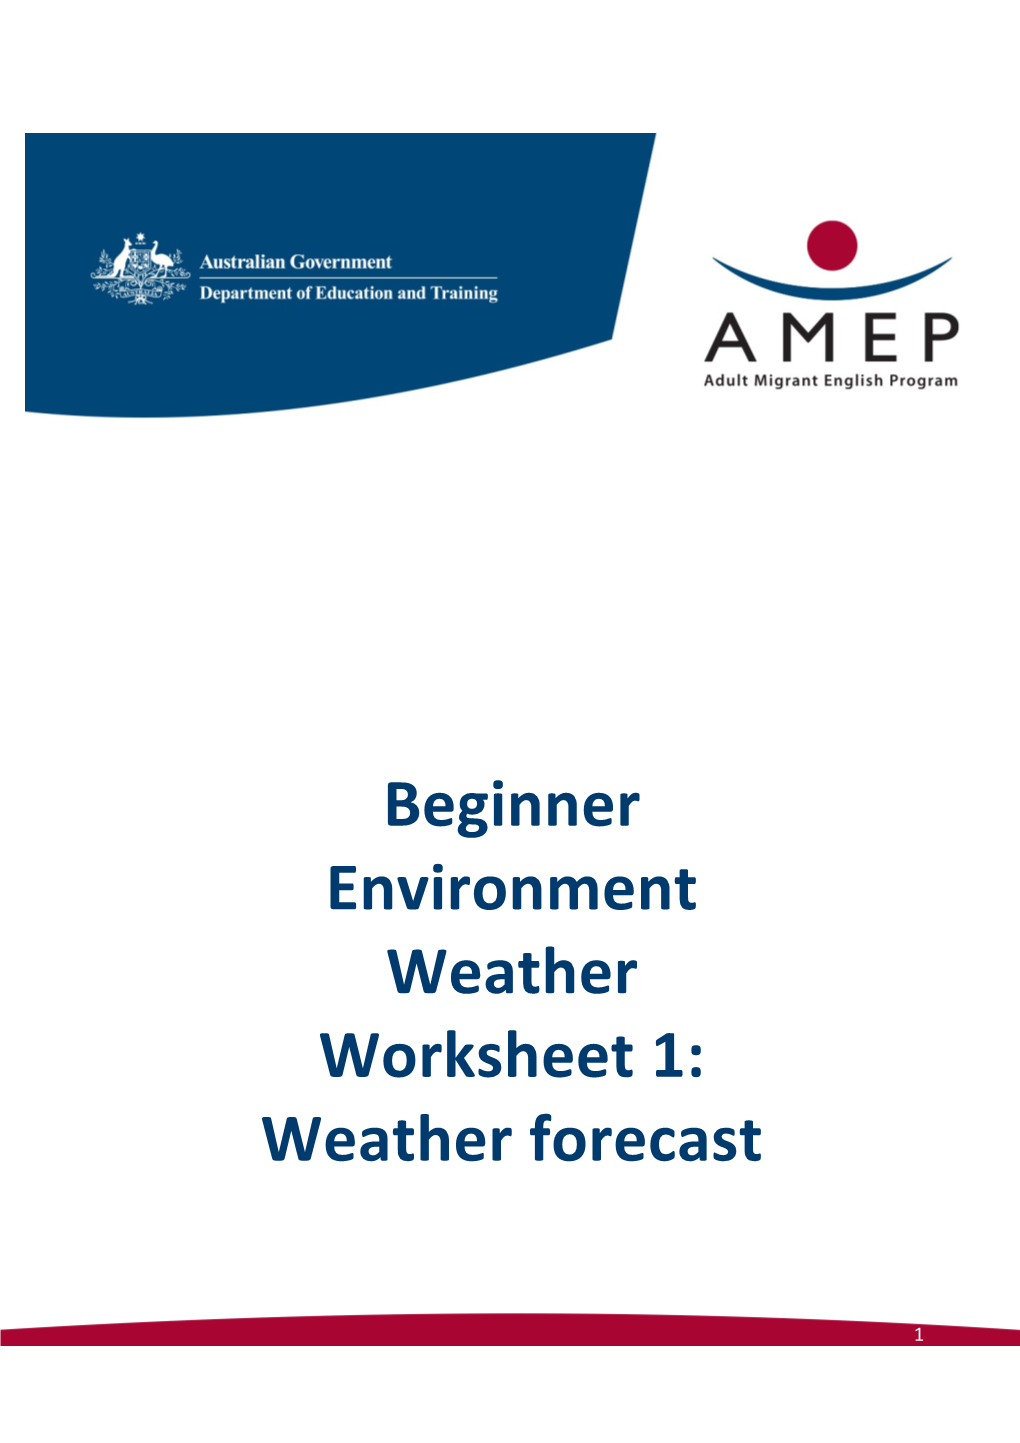 Beginner Environment Weather Worksheet 1: Weather Forecast